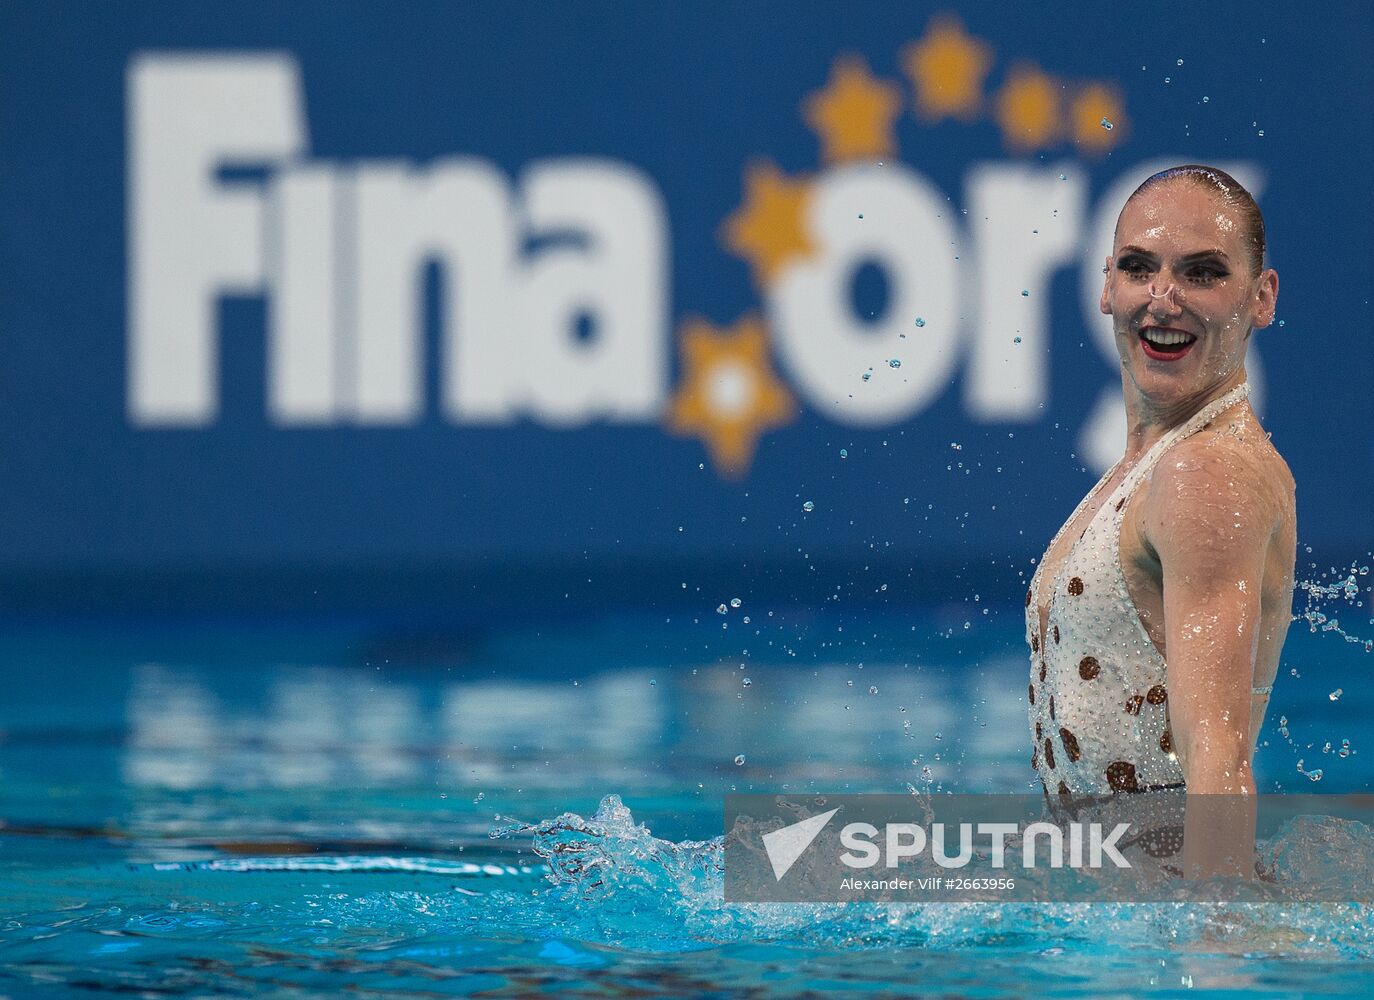 FINA World Championships 2015. Synchronized swimming. Solo technical routine preliminaries